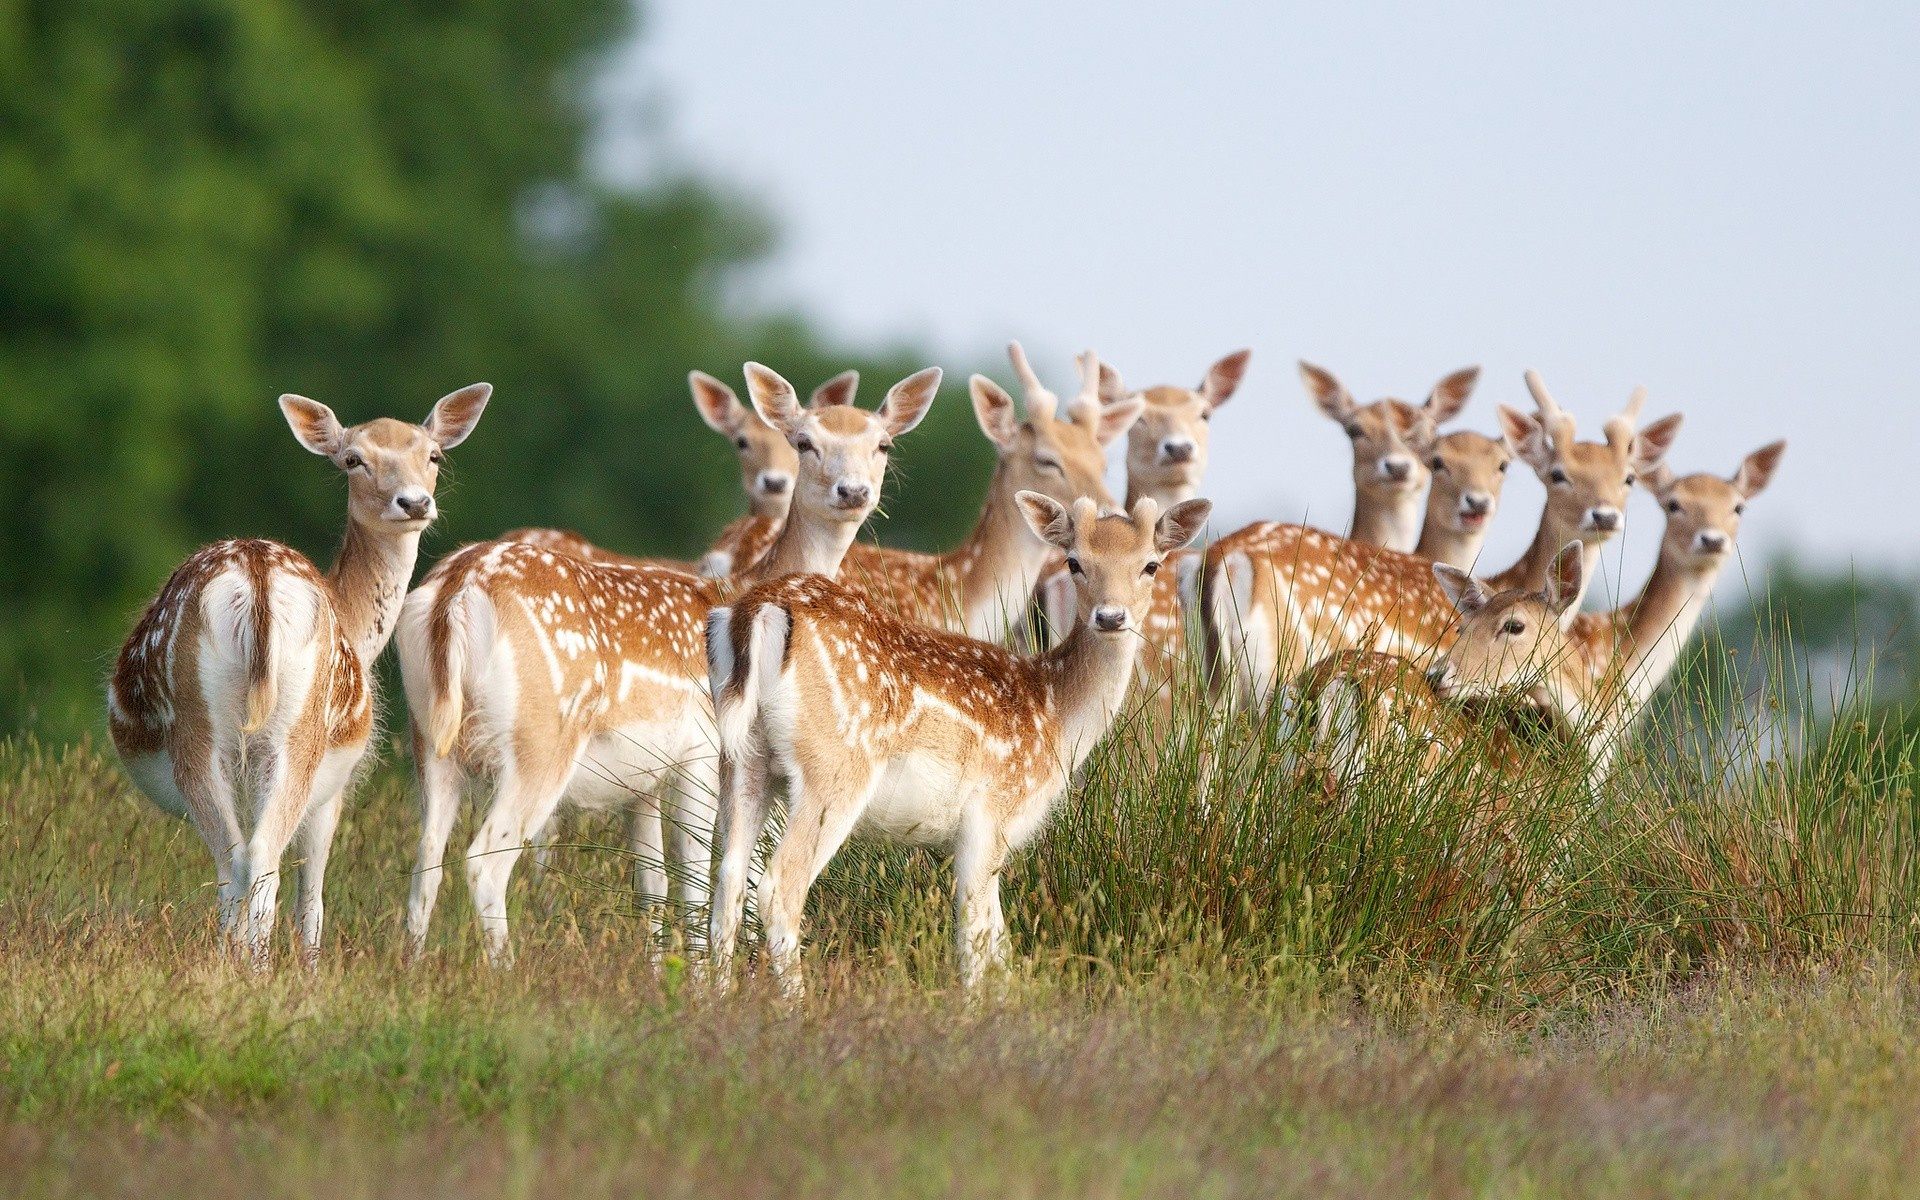 What is a herd of deer called?